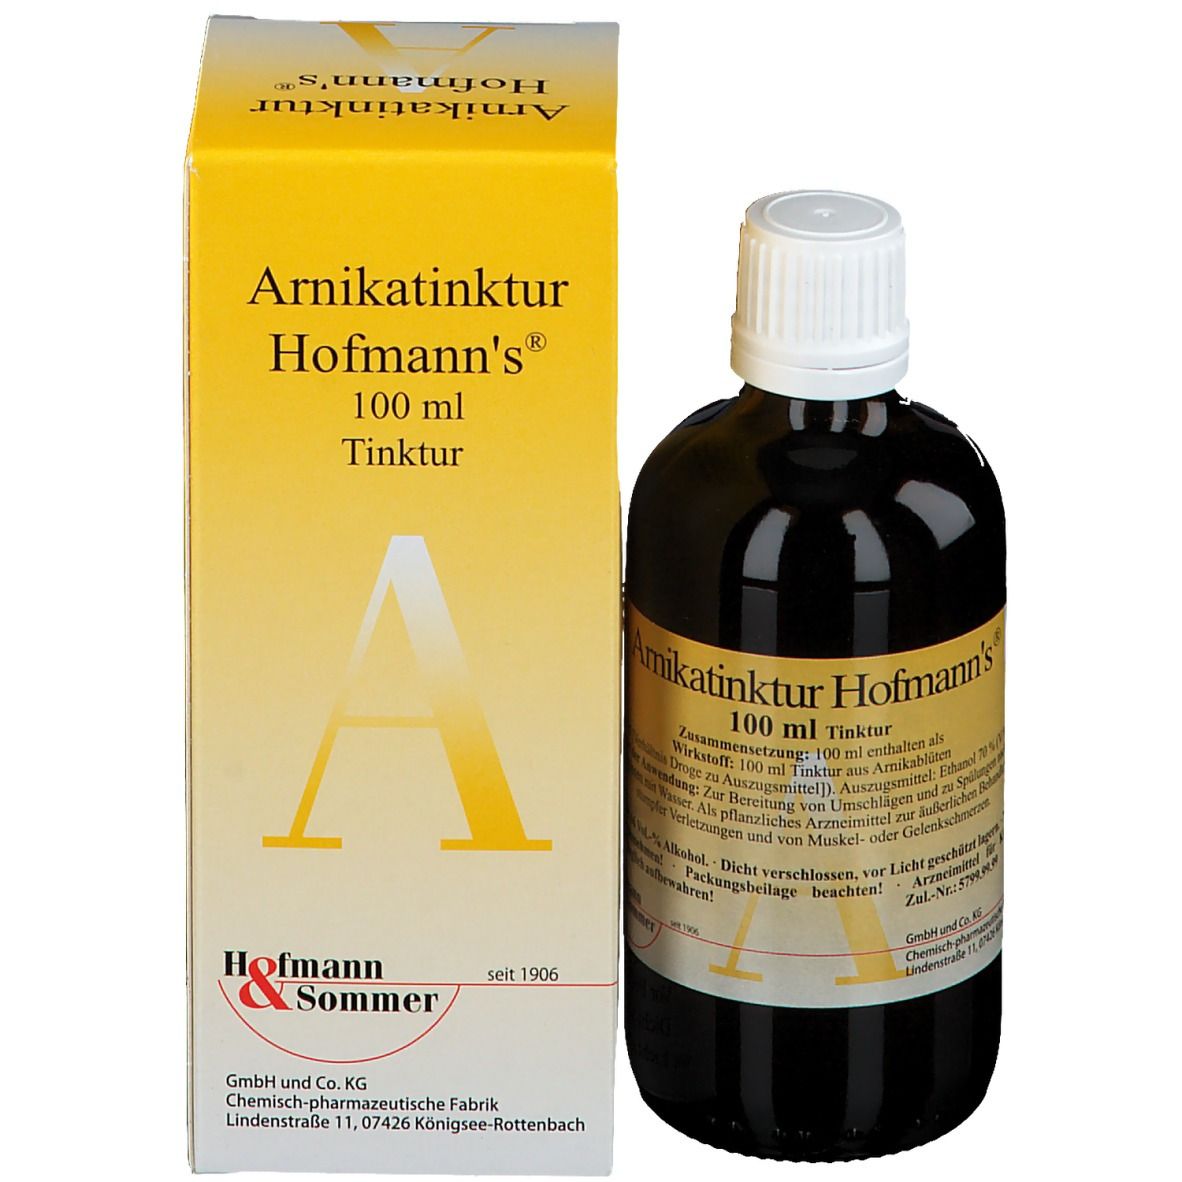 Arnikatinktur Hofmanns ®